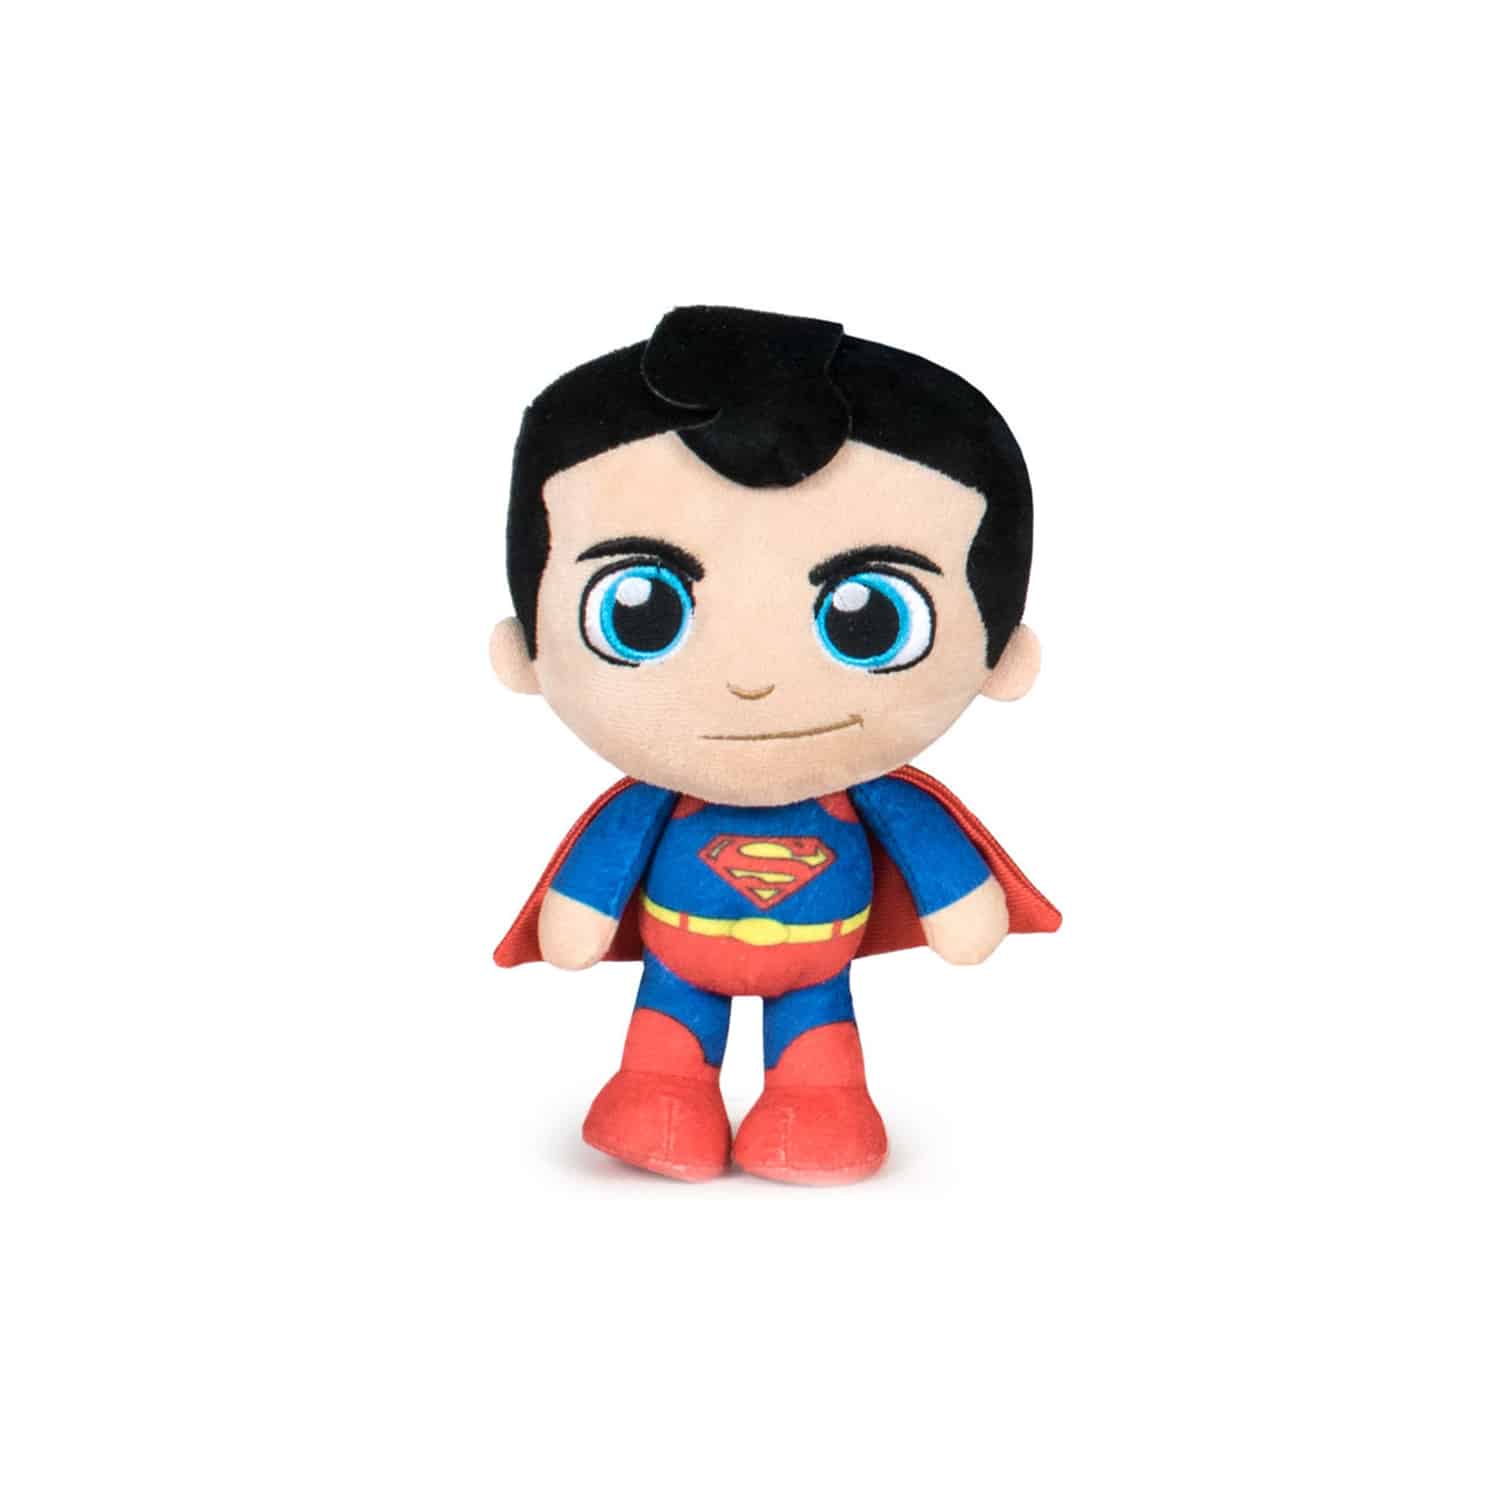 Superman Plush Toy